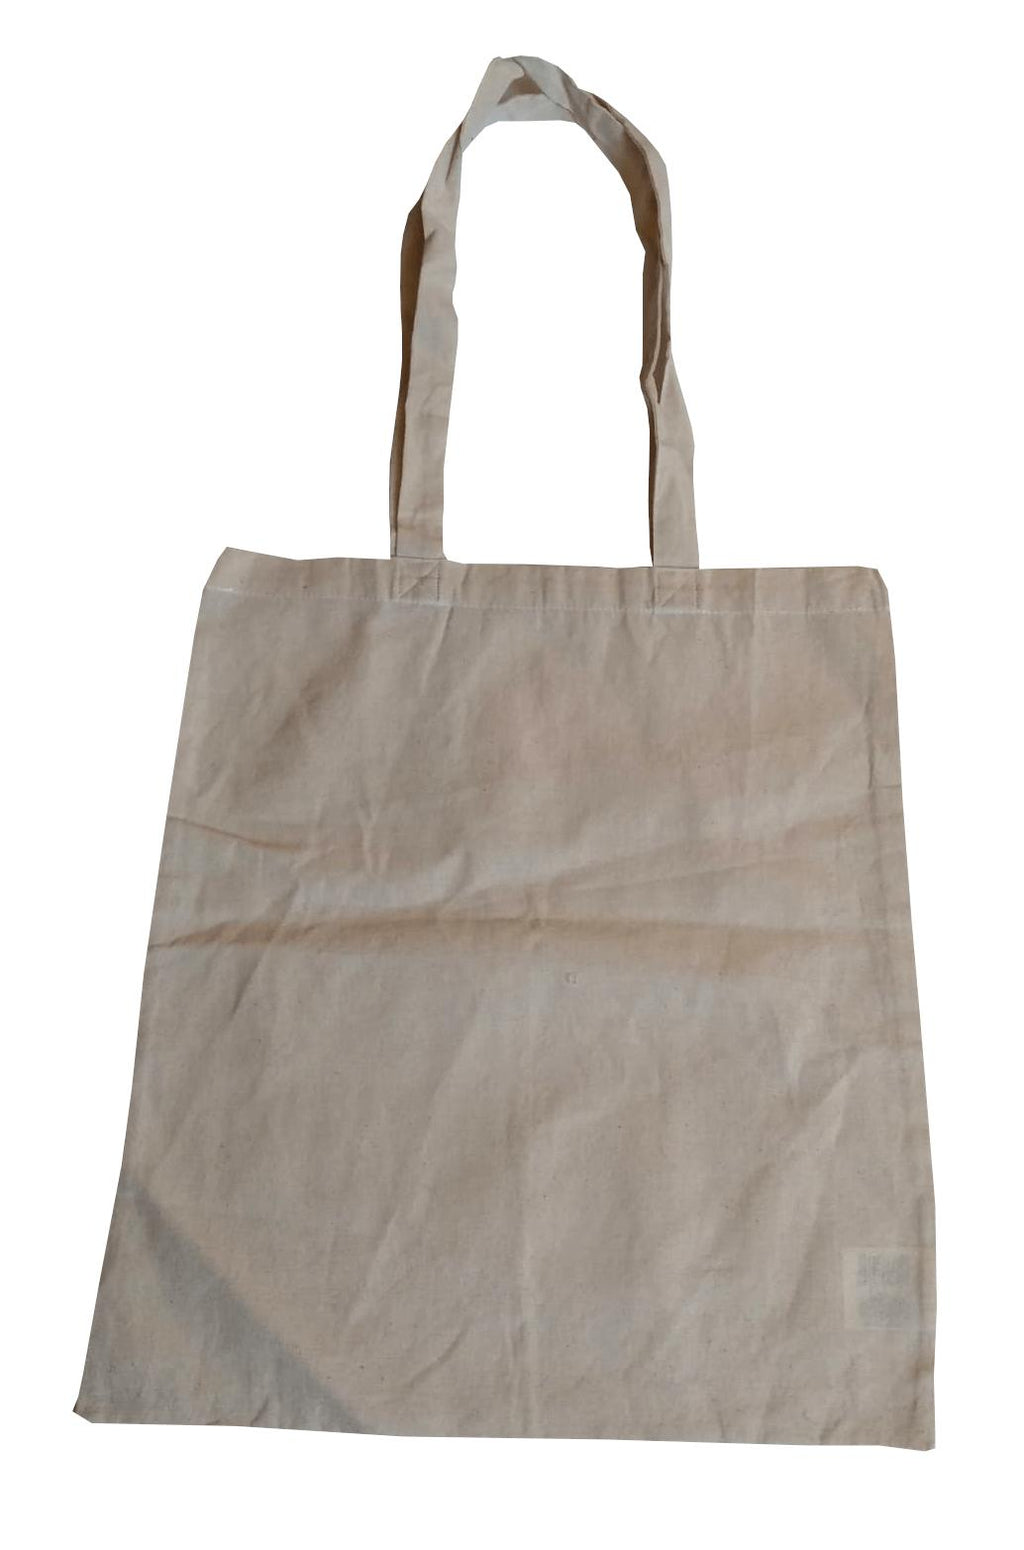 Long Handle Cotton Tote Bags - Gardnersbags